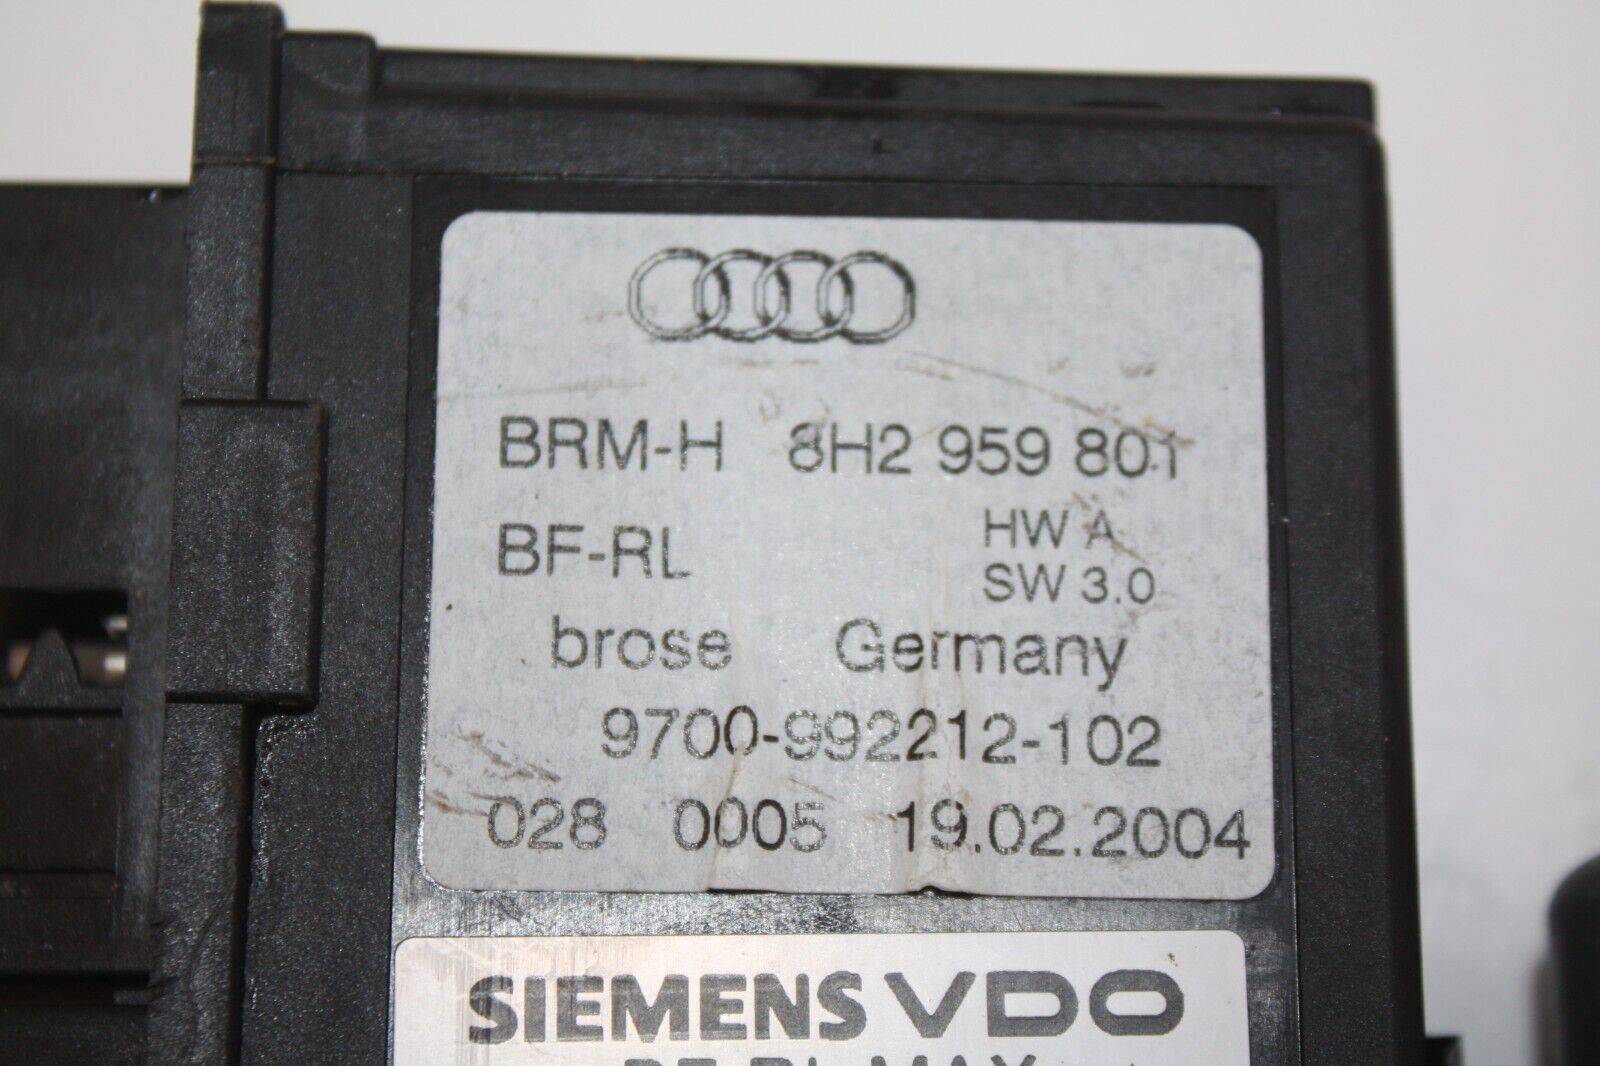 Audi-A4-B7-Front-Left-Window-Regulator-Motor-2004-8H2959801-Genuine-176174195758-10